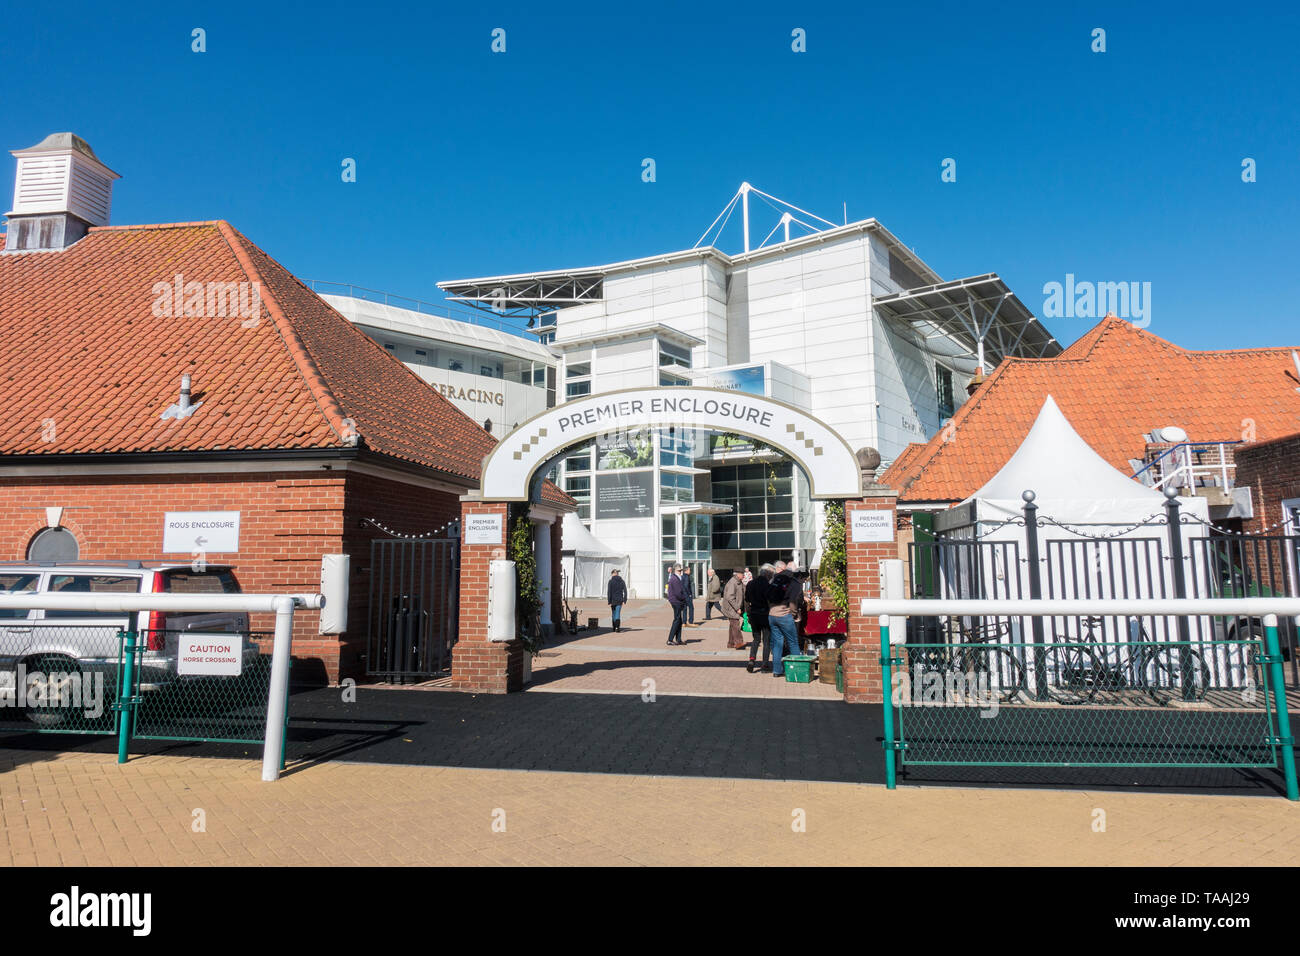 Entrance to Rowley Mile racecourse Newmarket 2019 Stock Photo